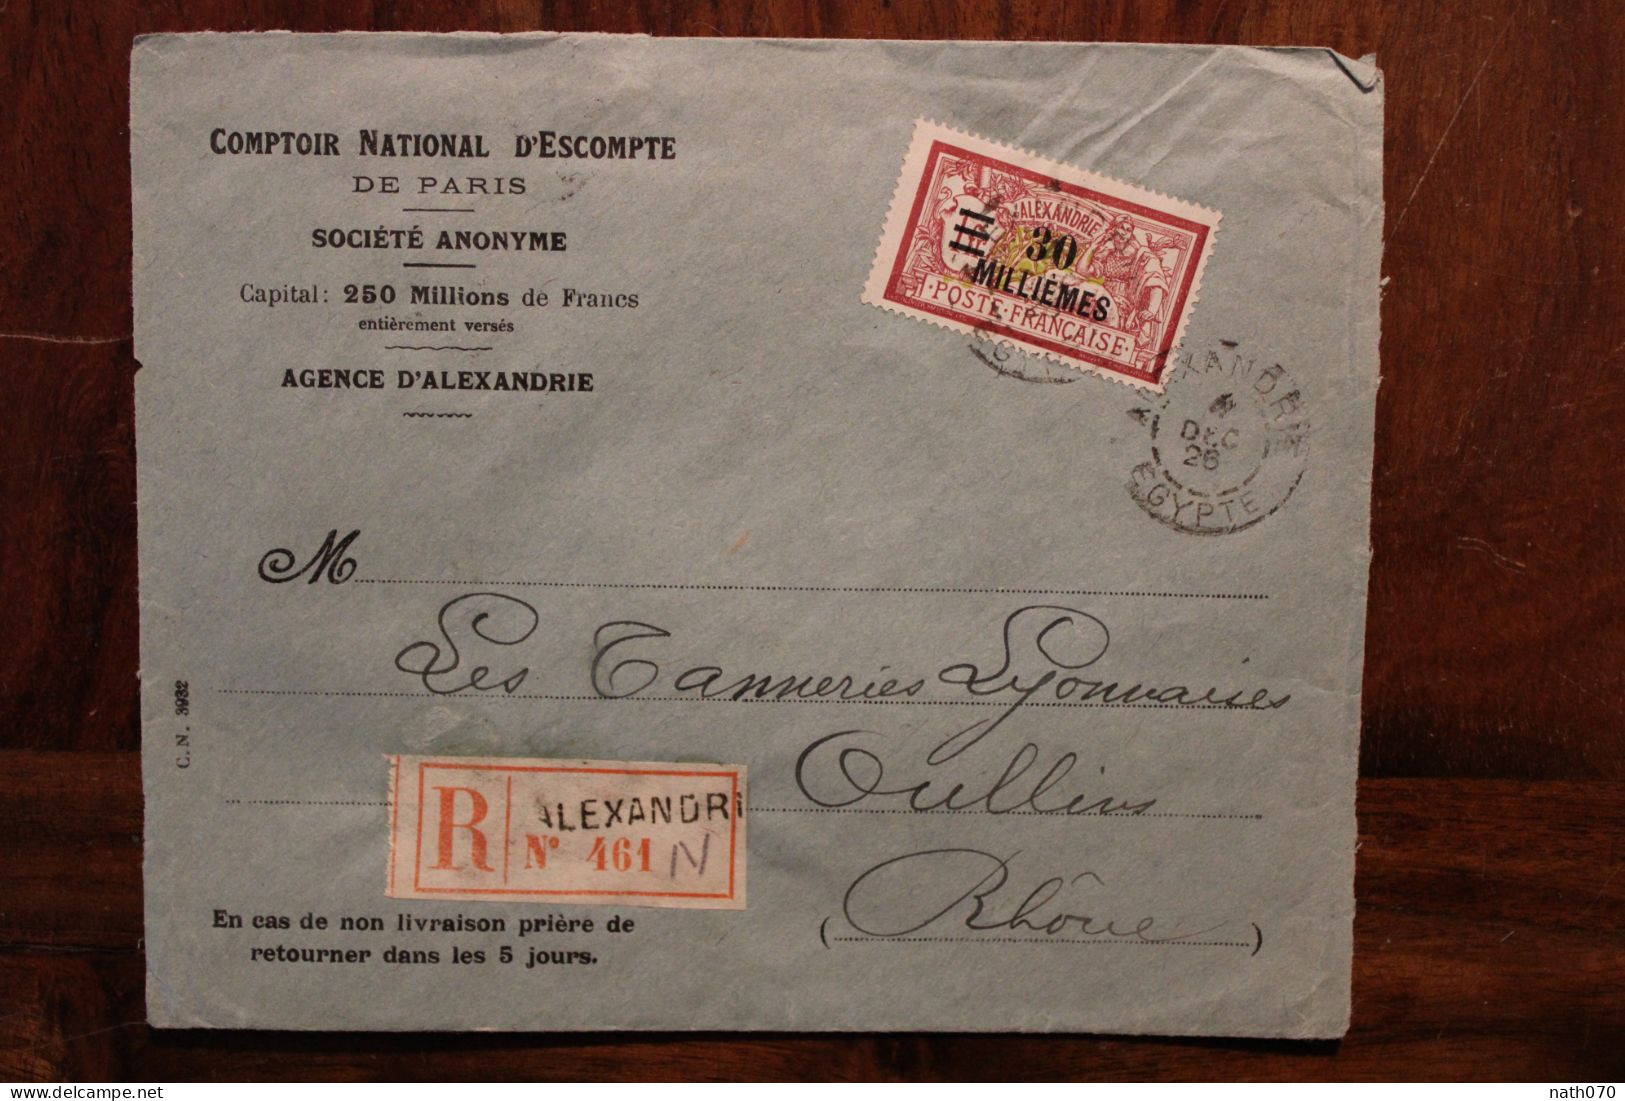 Alexandrie 1926 France Egypte Cover Egypt Ägypten Front D'enveloppe Recommandé Registered Reco R - Storia Postale